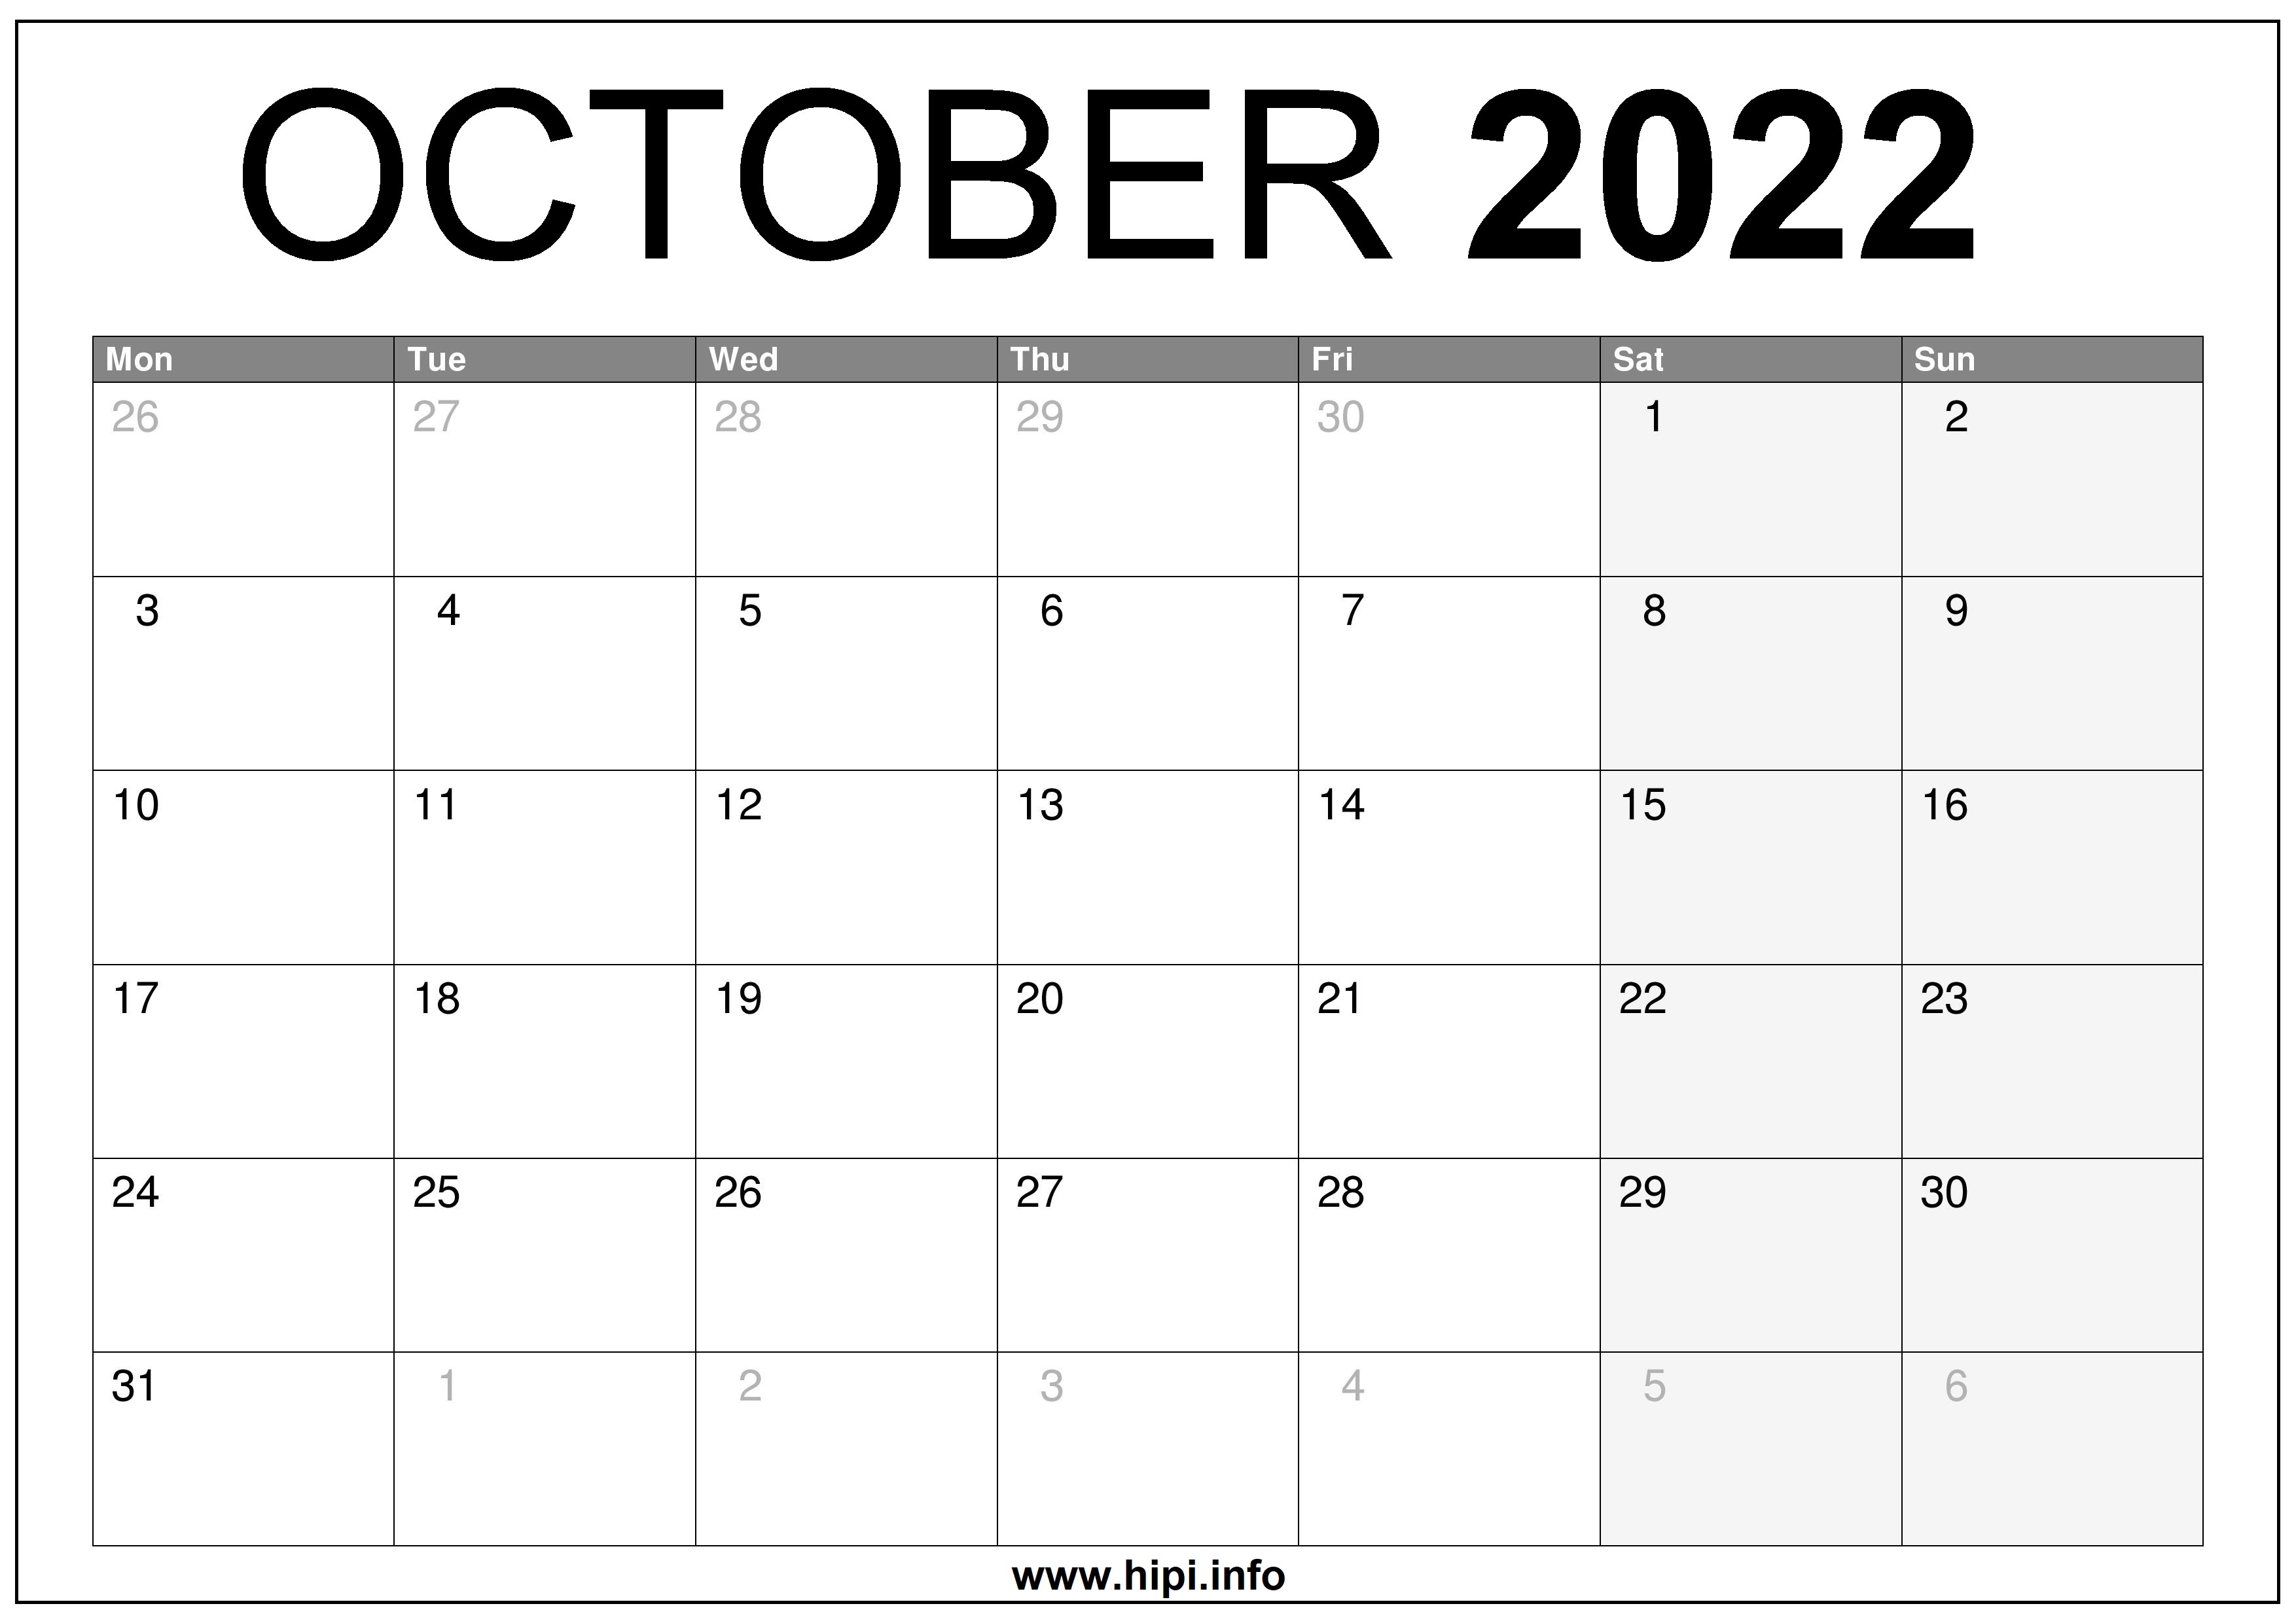 Free Printable October Calendar 2022 October 2022 Uk Calendar Printable Free - Hipi.info | Calendars Printable  Free